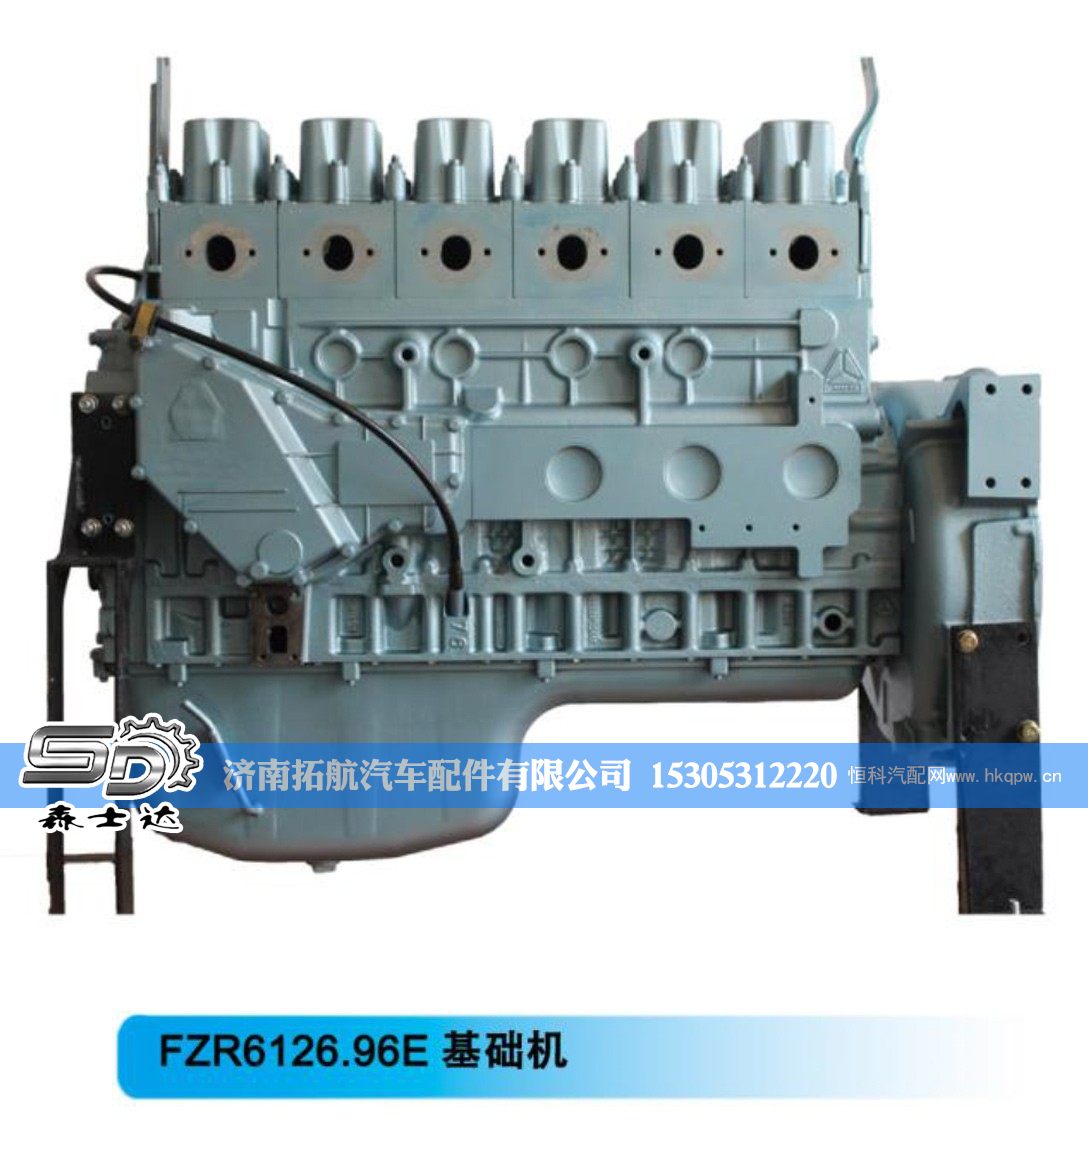 ,FZR6126.96E基础机,济南拓航汽车配件有限公司